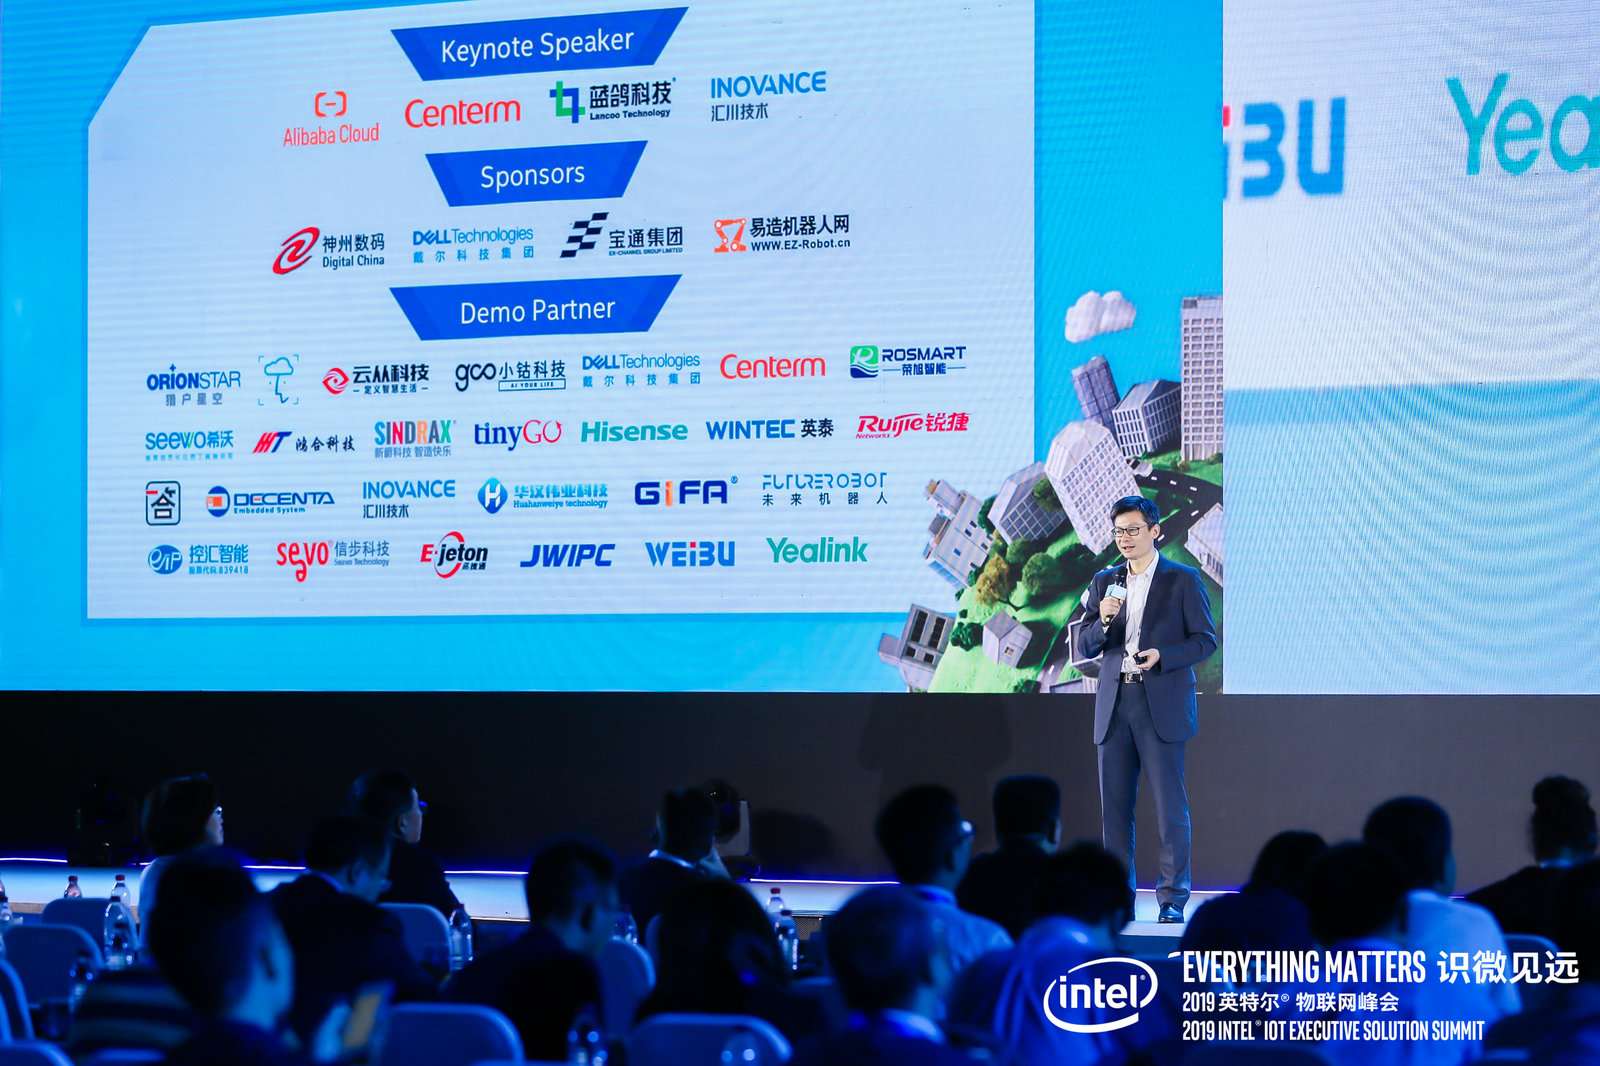 Intel DemoPartner Future Robot Technology Co., Ltd